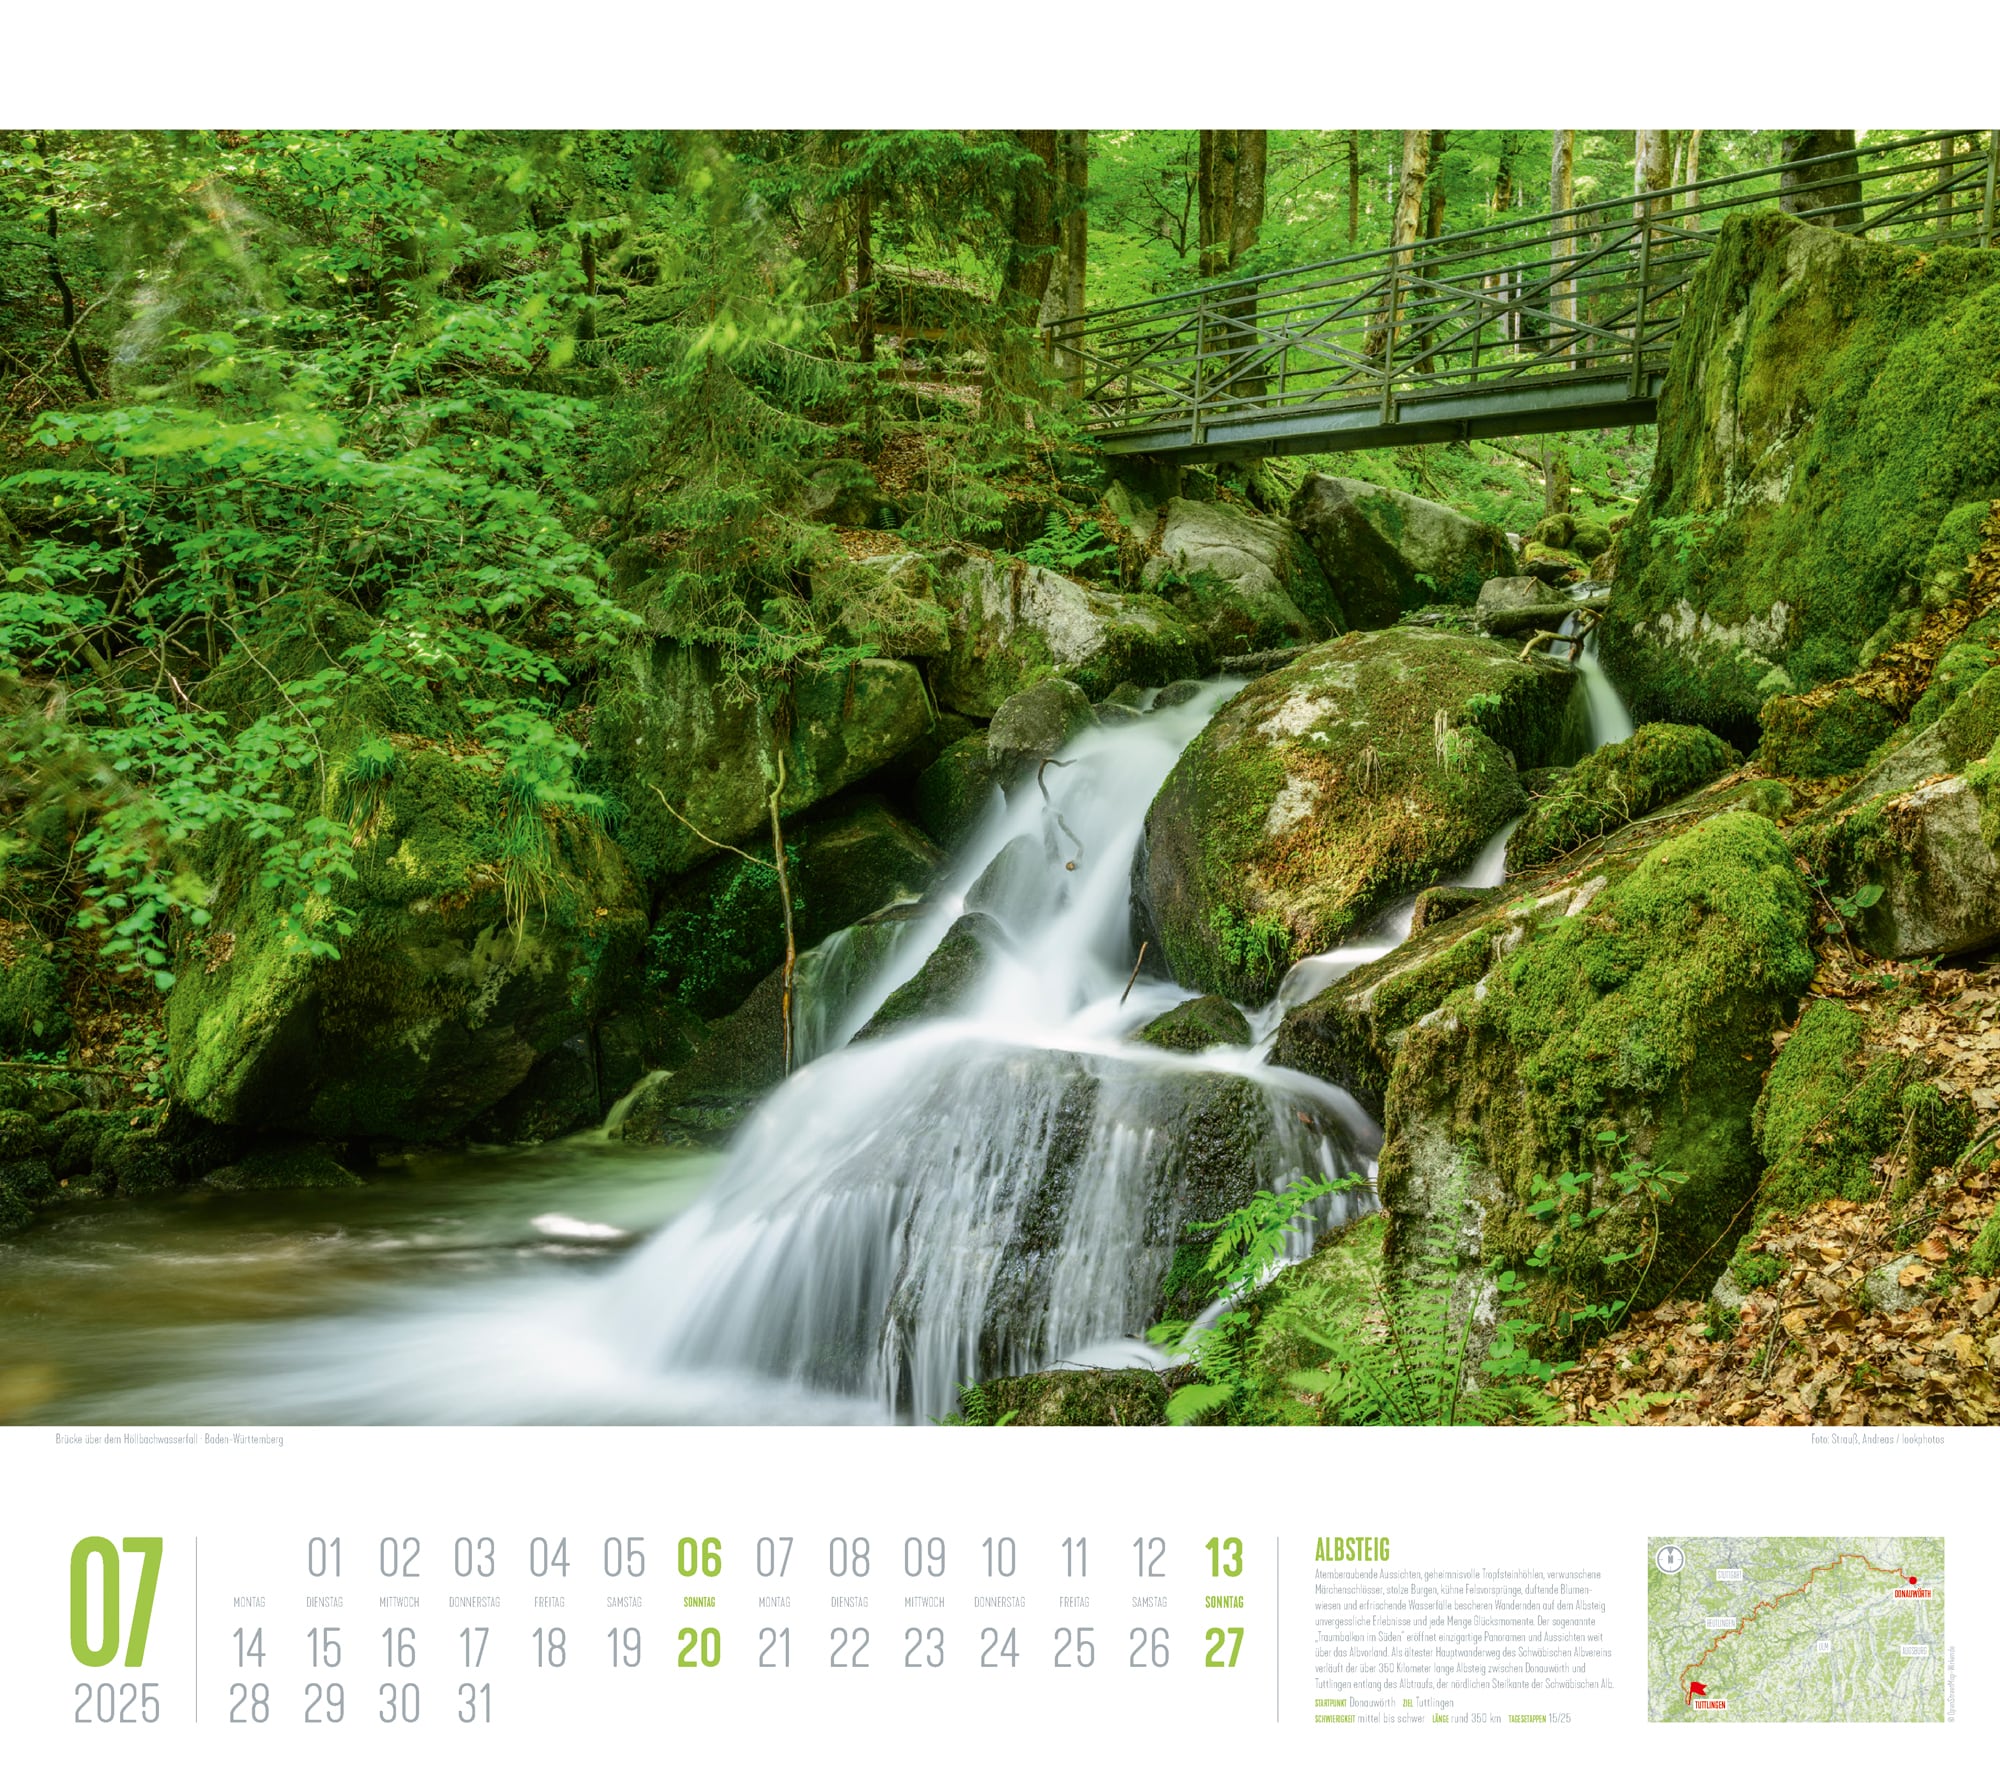 Ackermann Calendar Hiking Trails of Germany 2025 - Inside View 07